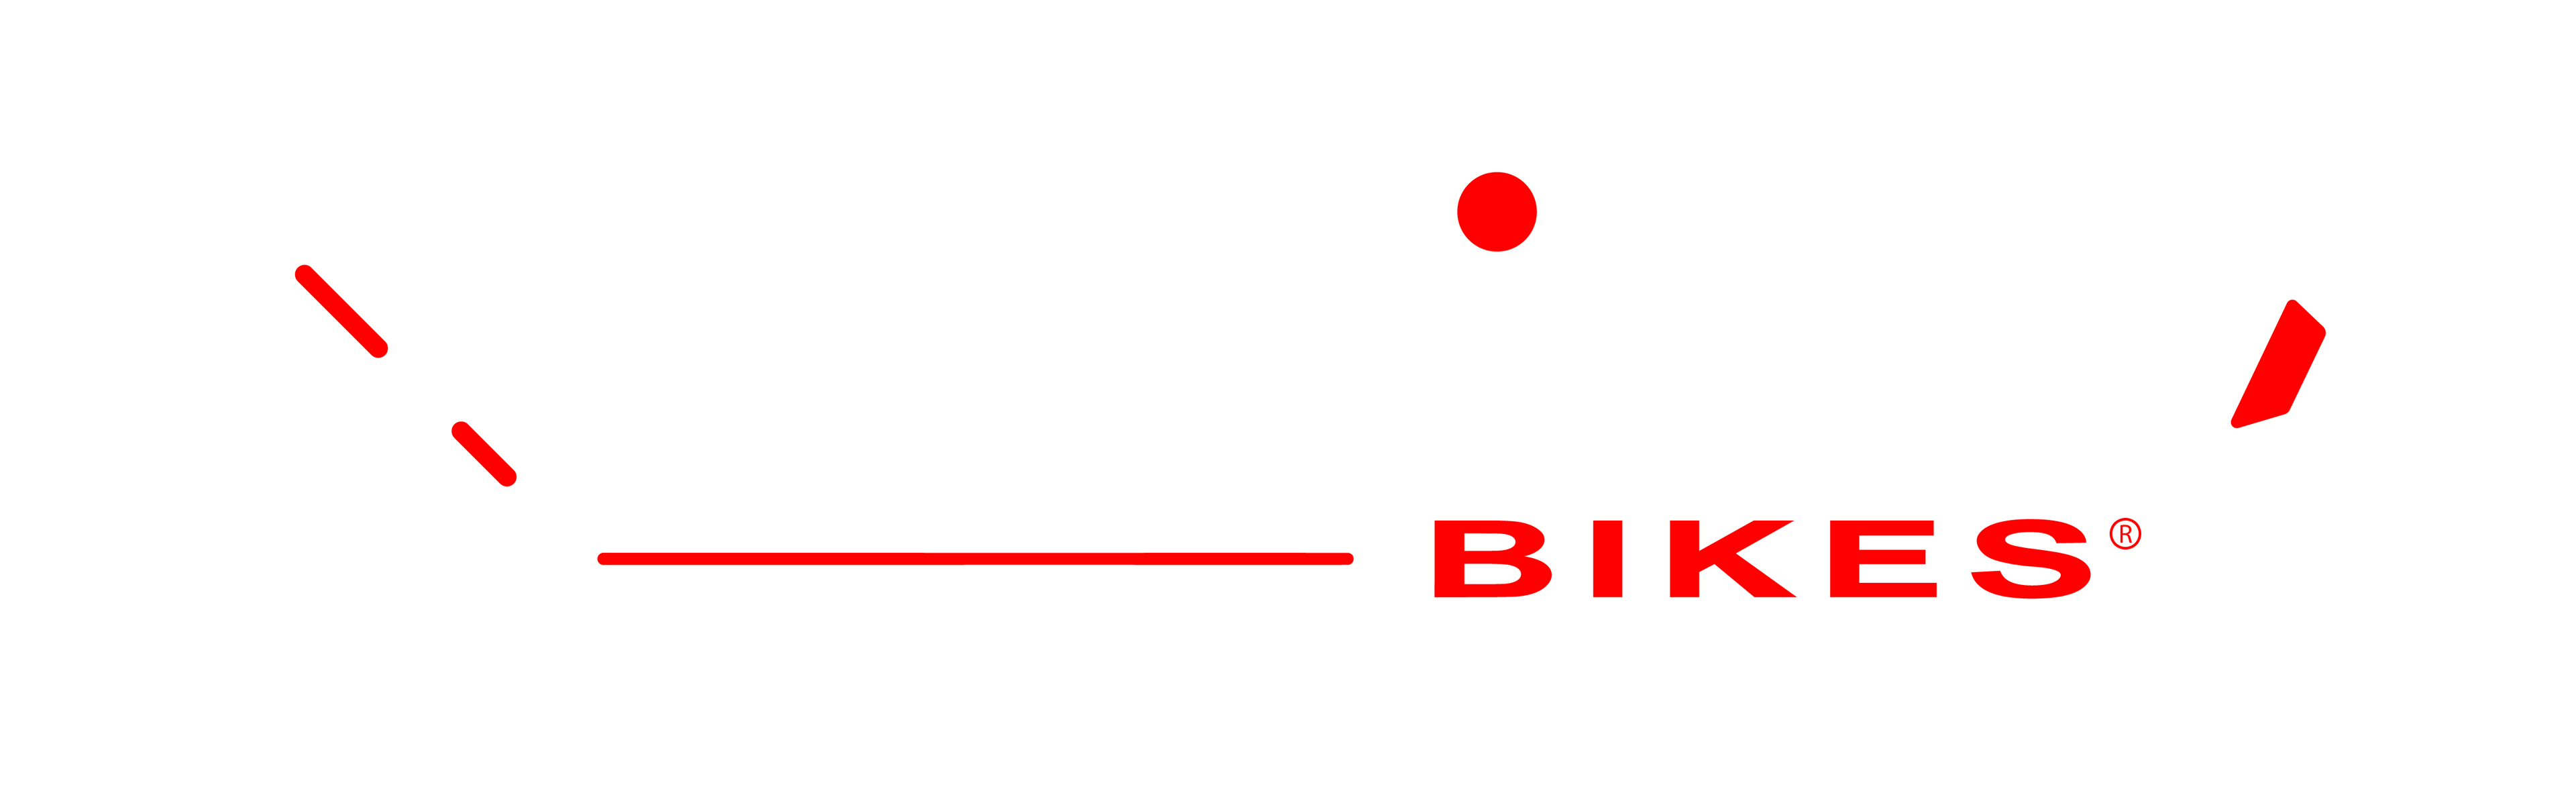 Juiced Bikes Help Center logo